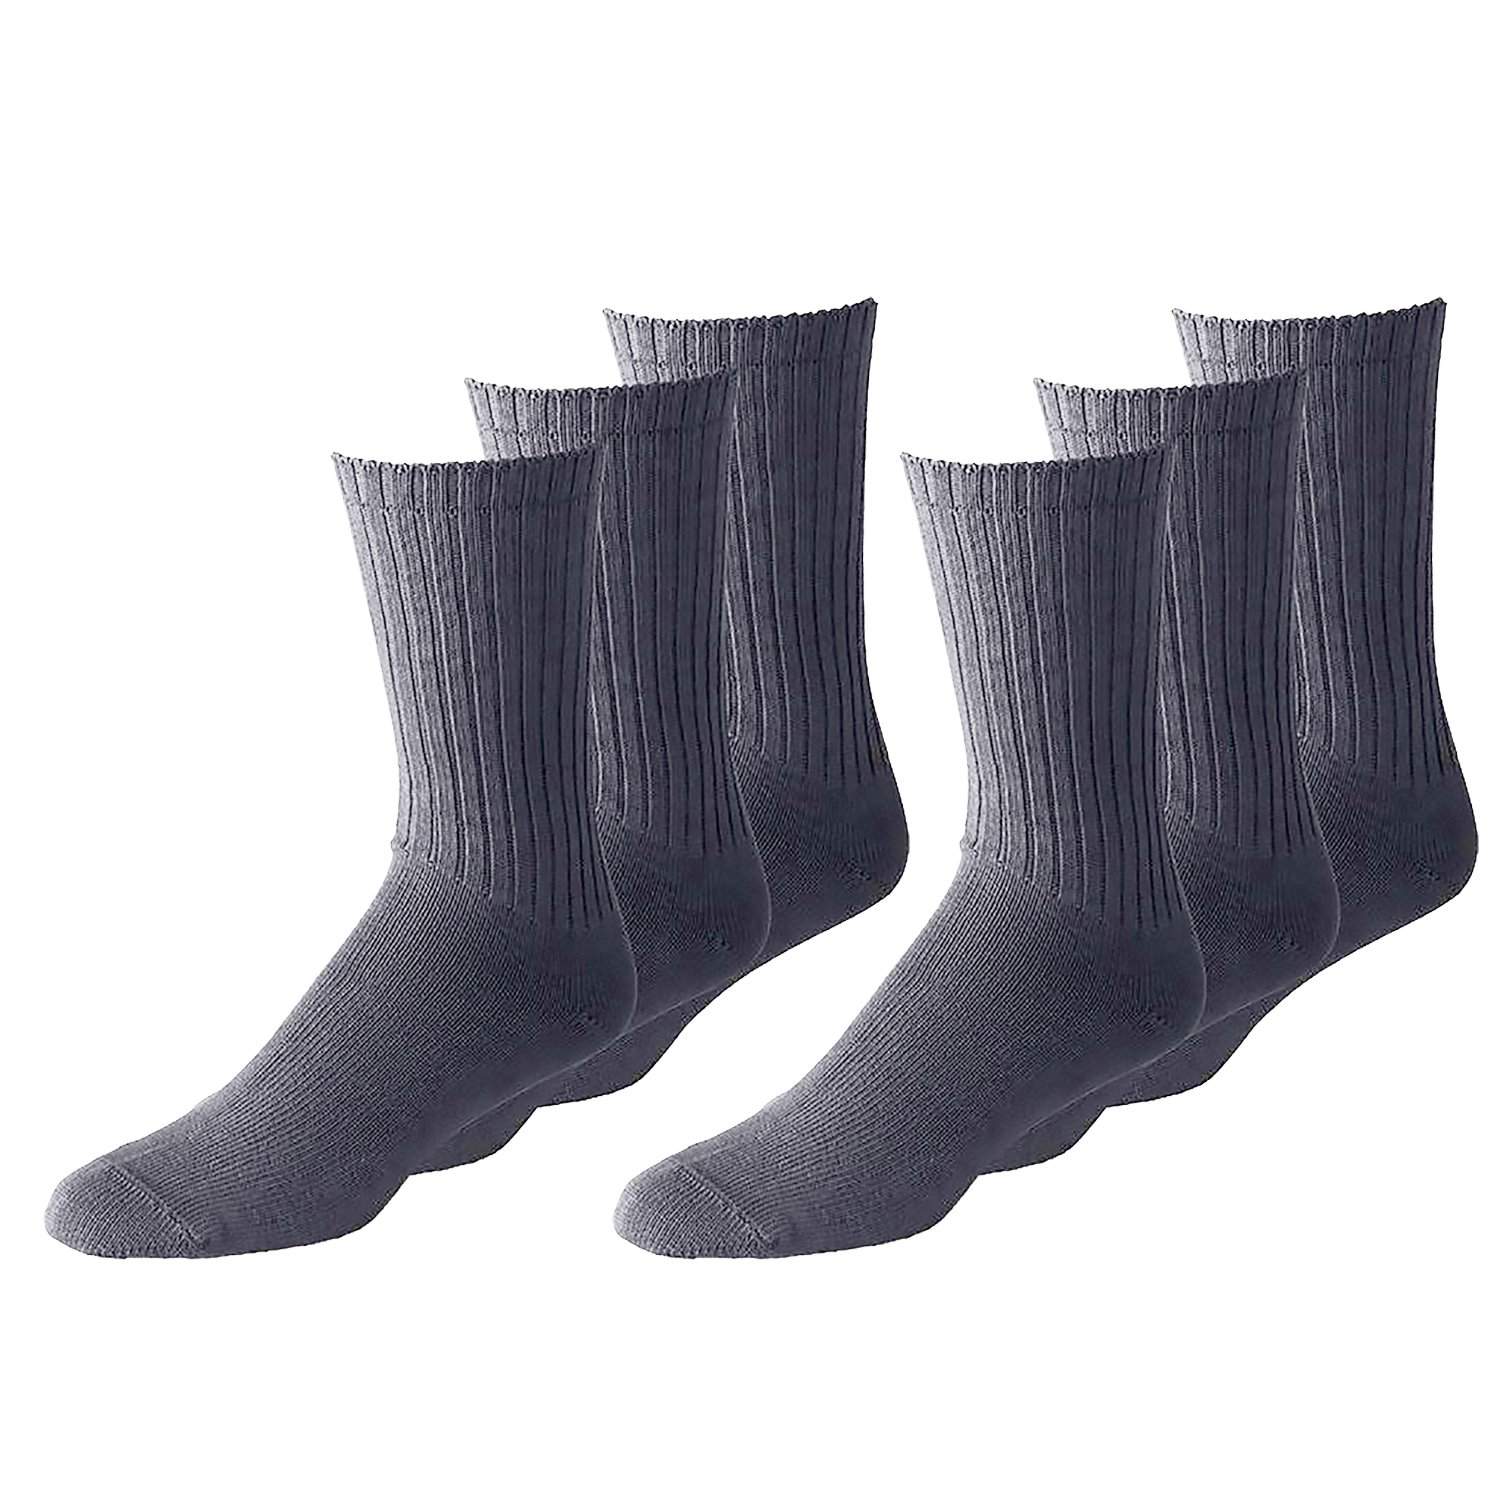 36 Pairs Women's Athletic Crew Socks - Bulk Wholesale Packs - Any Shoe Size